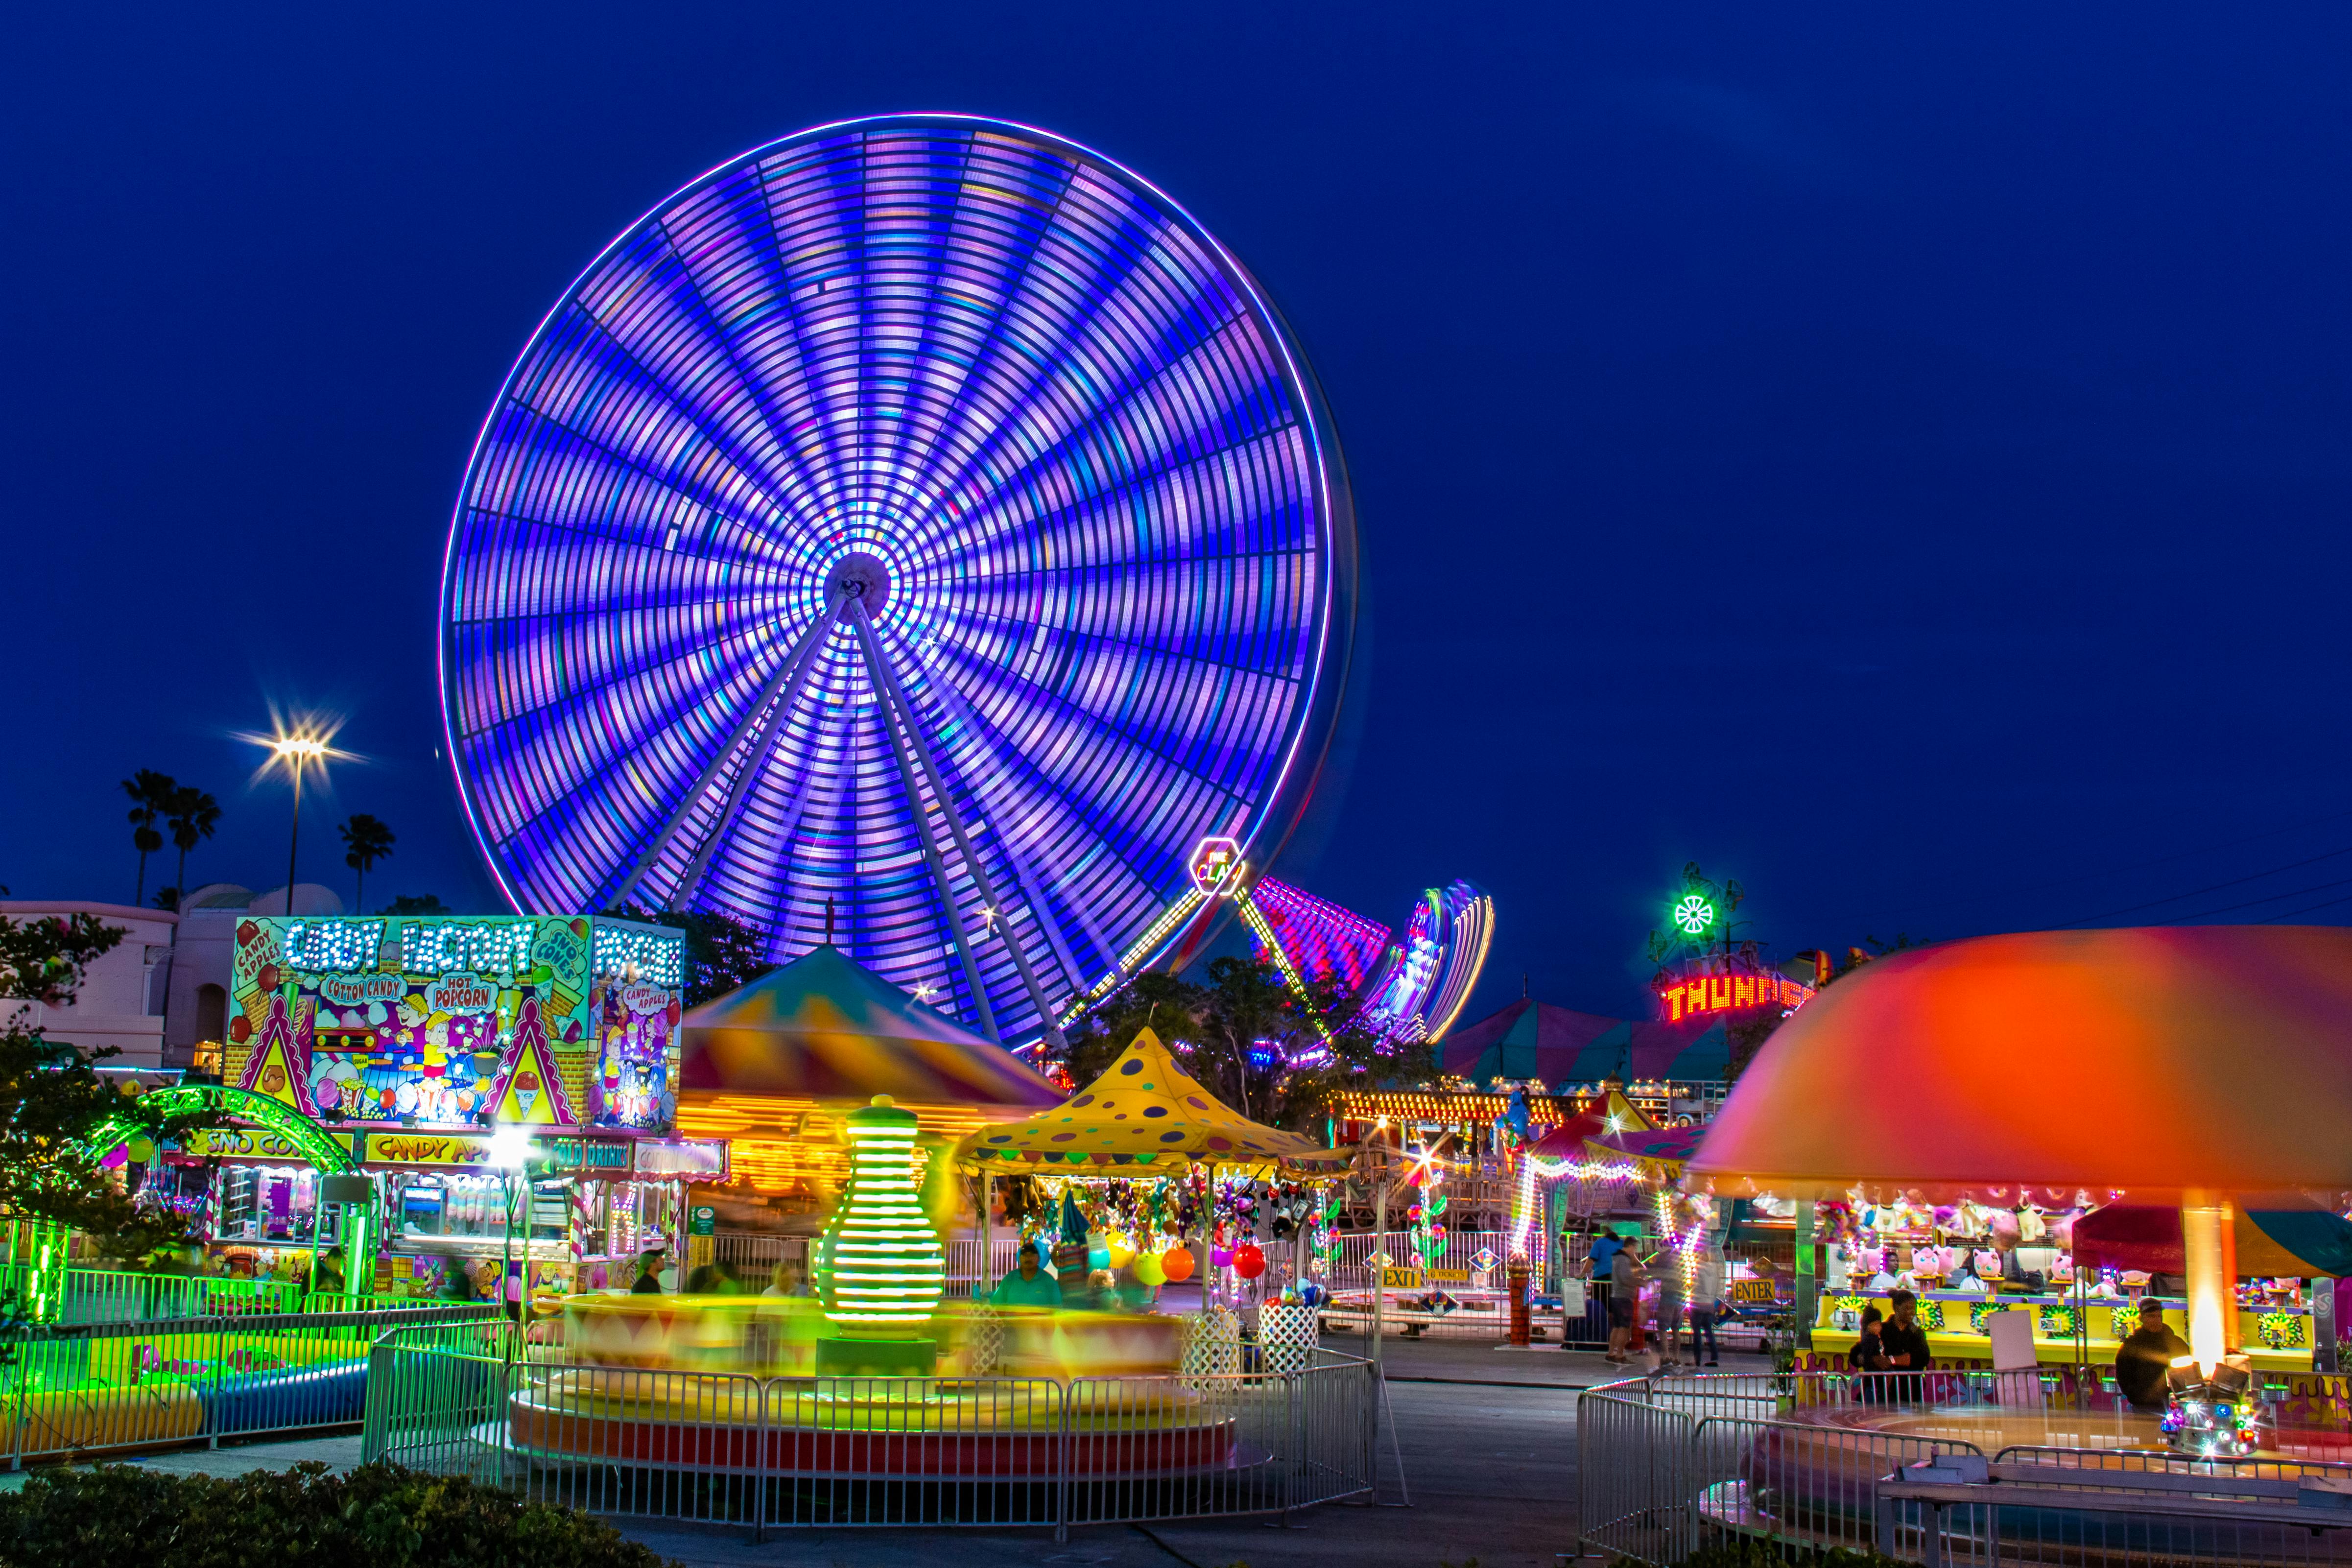 An amusement park at night | Source: Pexels